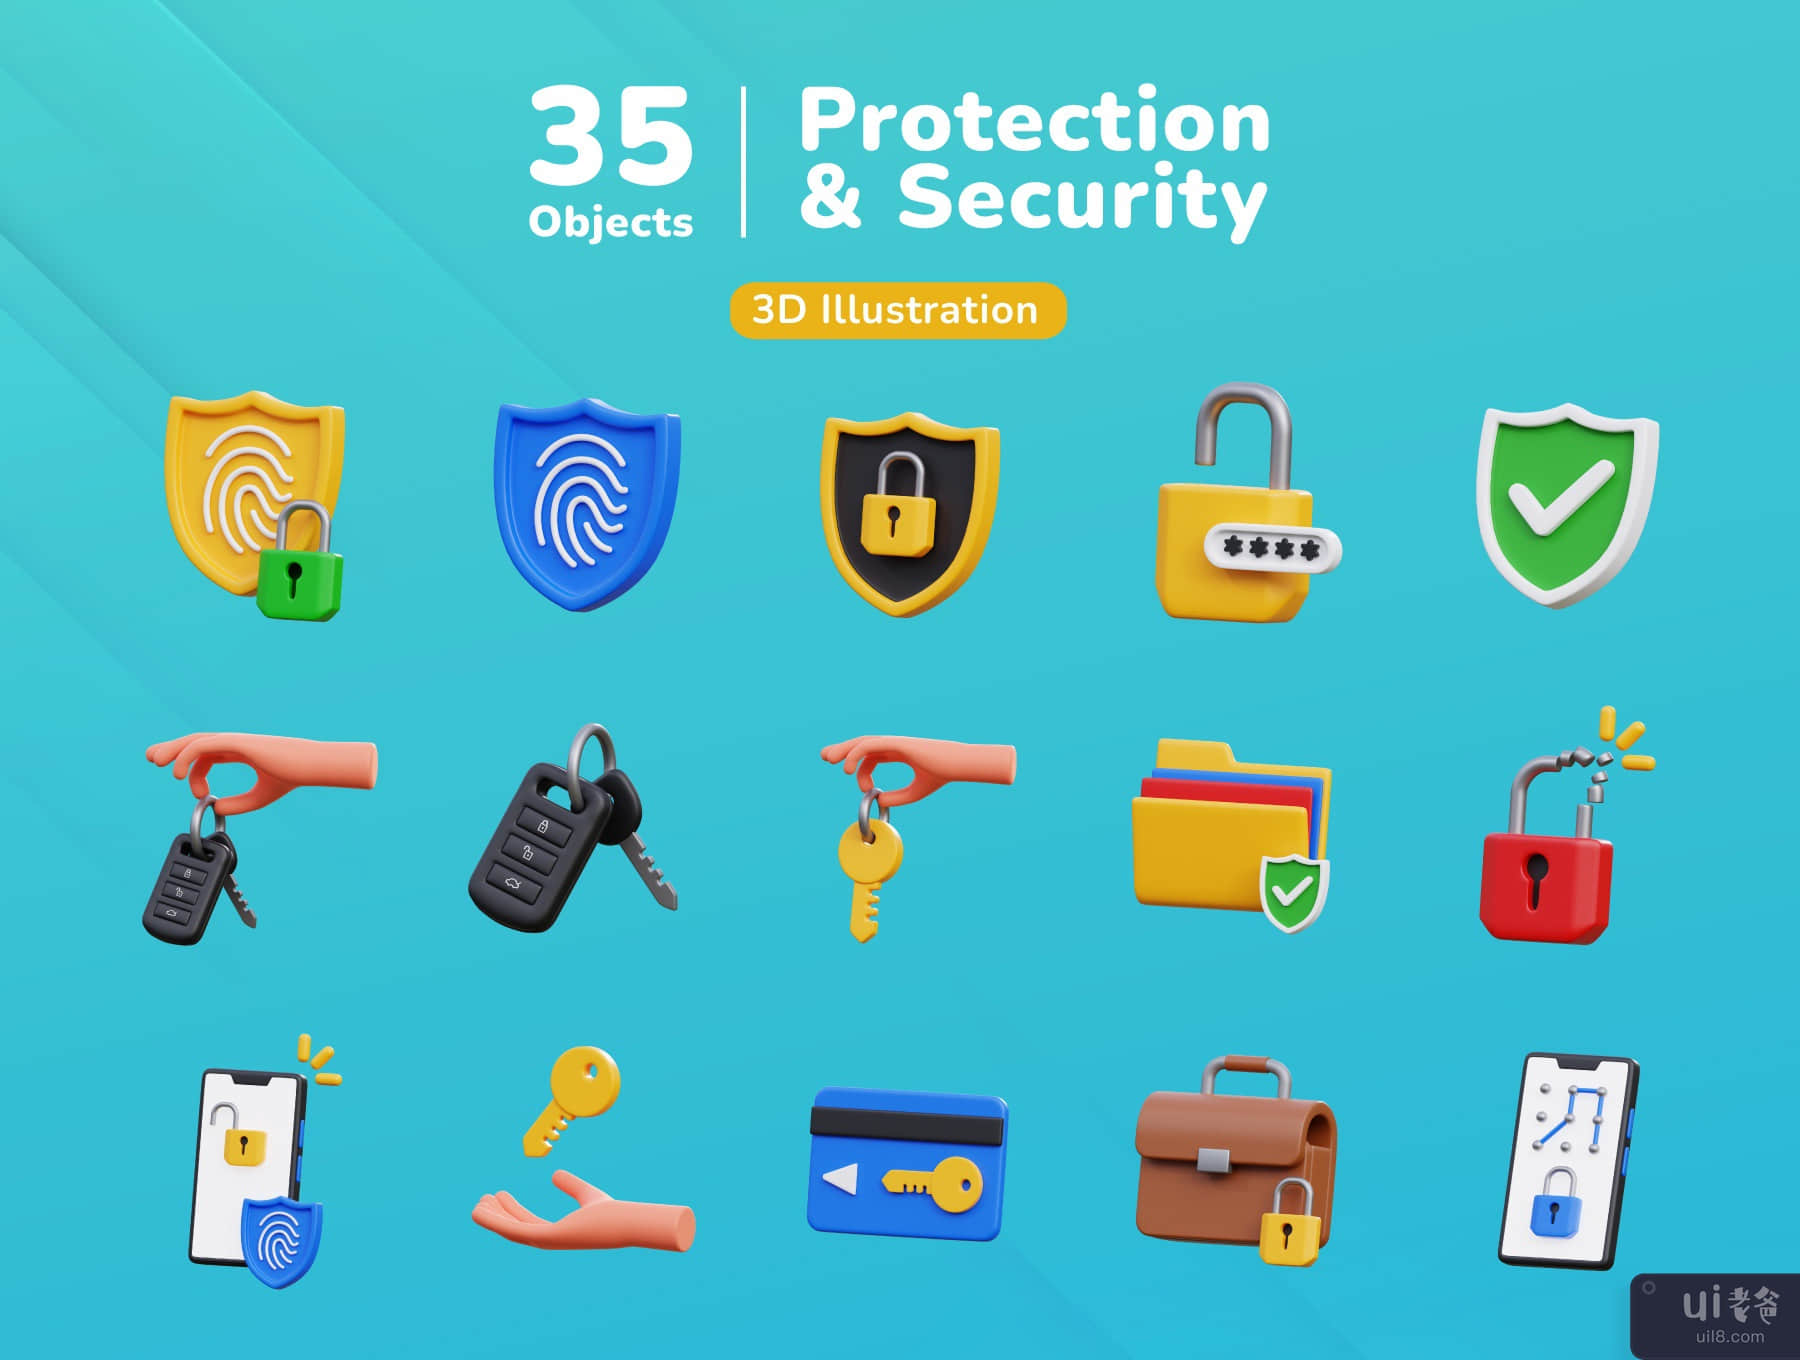 保护与安全 3D 图标集 (Protection & Security 3D Icon Set)插图1